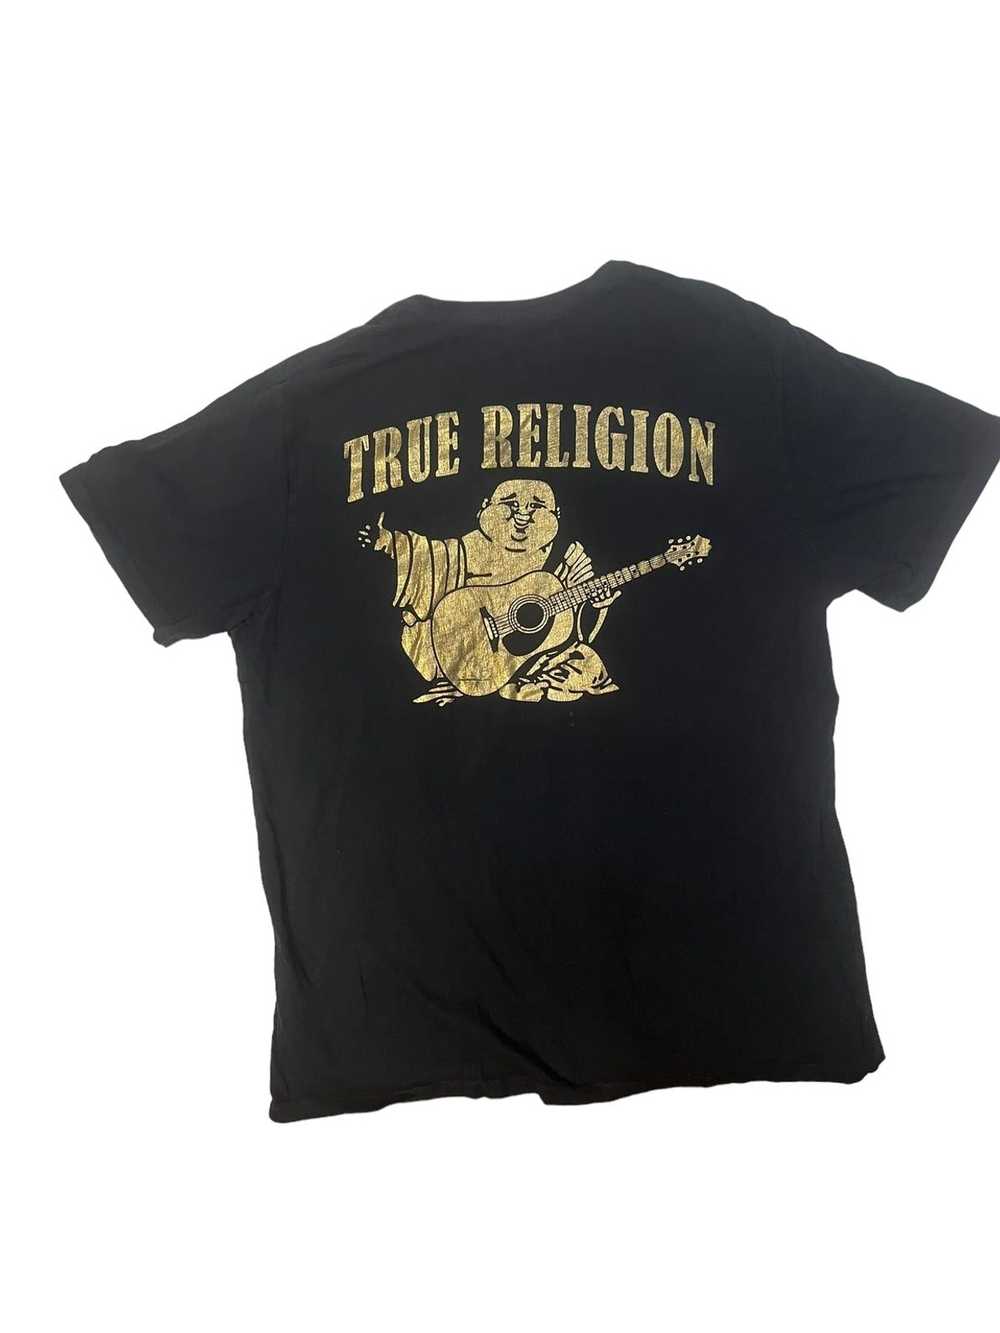 True Religion True Religion Gold Buddha Black T-S… - image 1